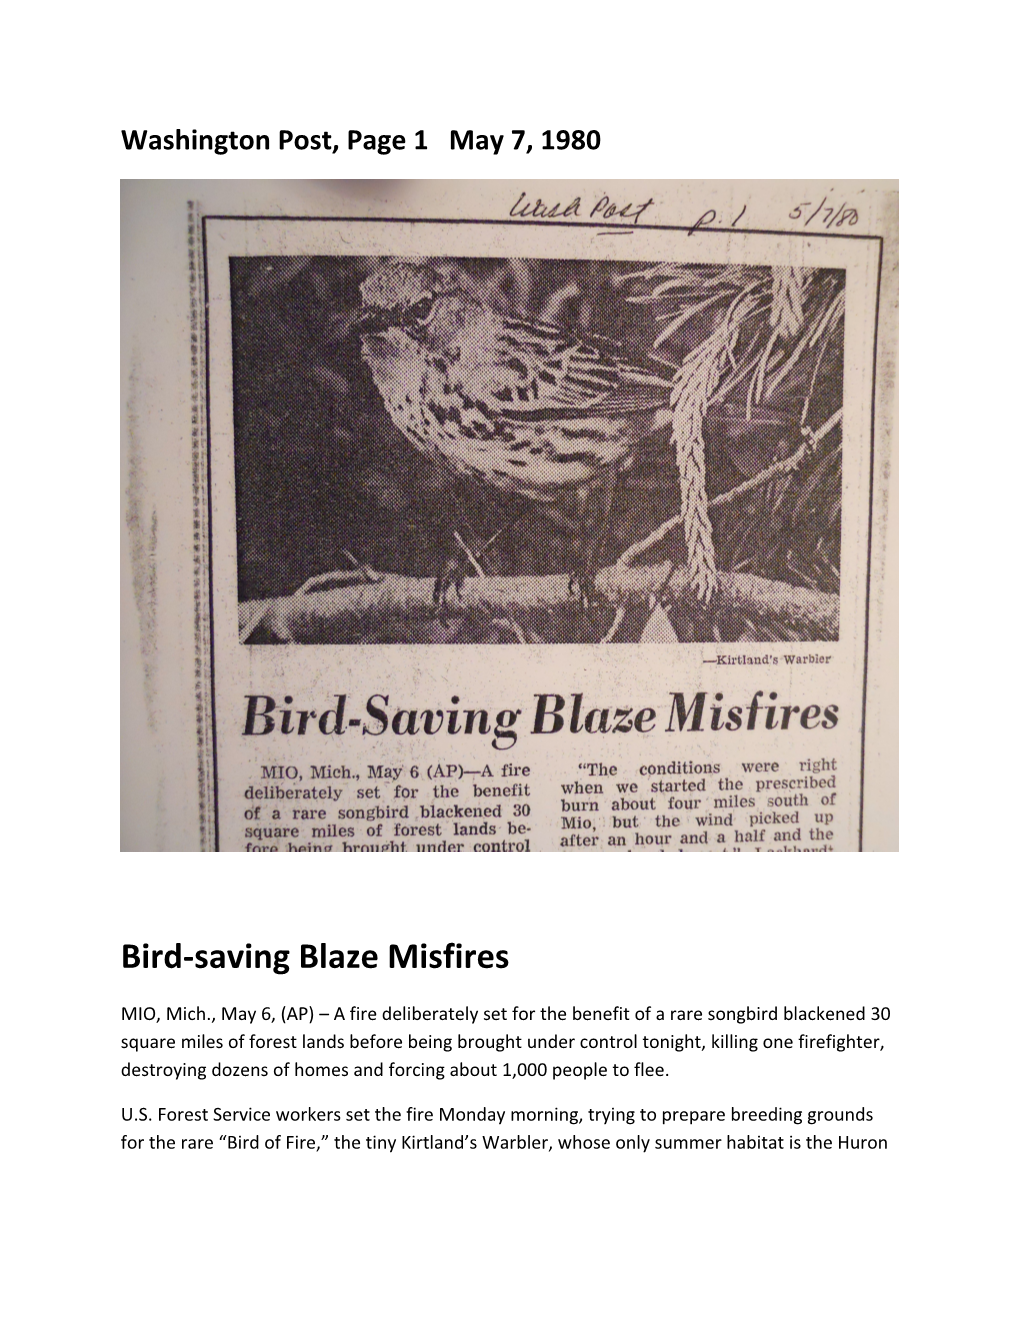 Bird-Saving Blaze Misfires